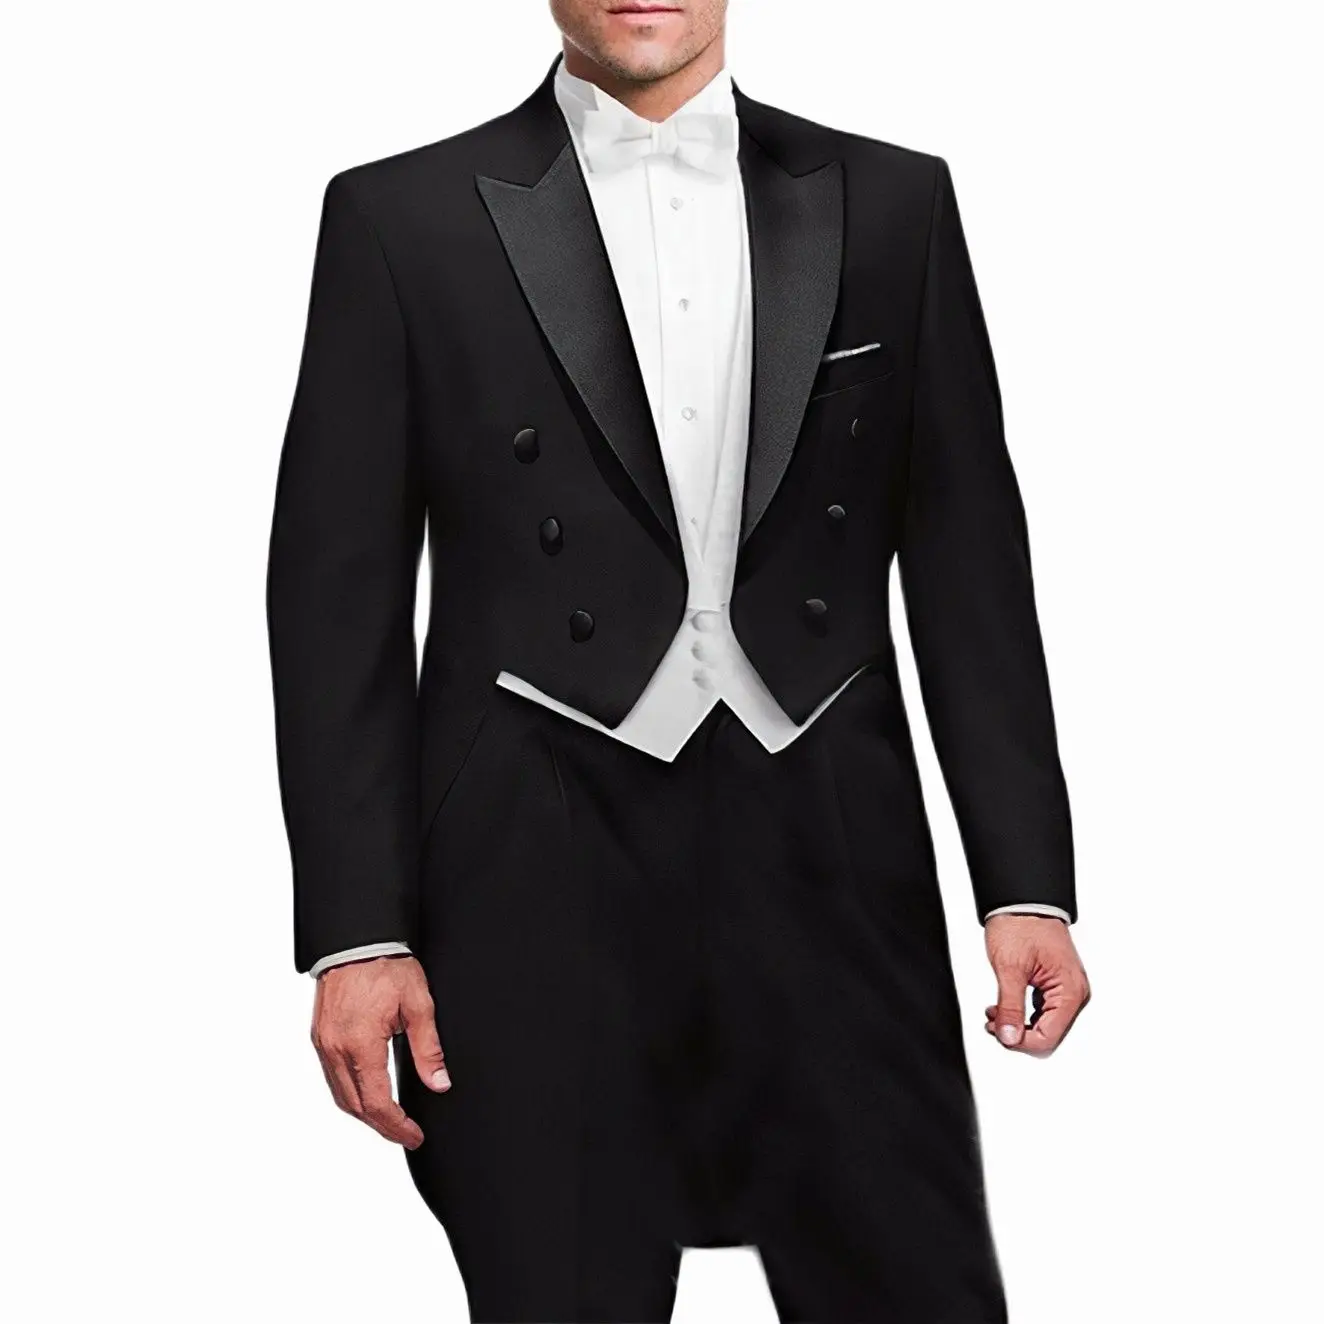 New Italian Tailcoat Design Men Suits For Wedding Prom (Jacket+Pants+Vest) Elgant Terno Men Suit Set Groomsmen Groom Tuxedos